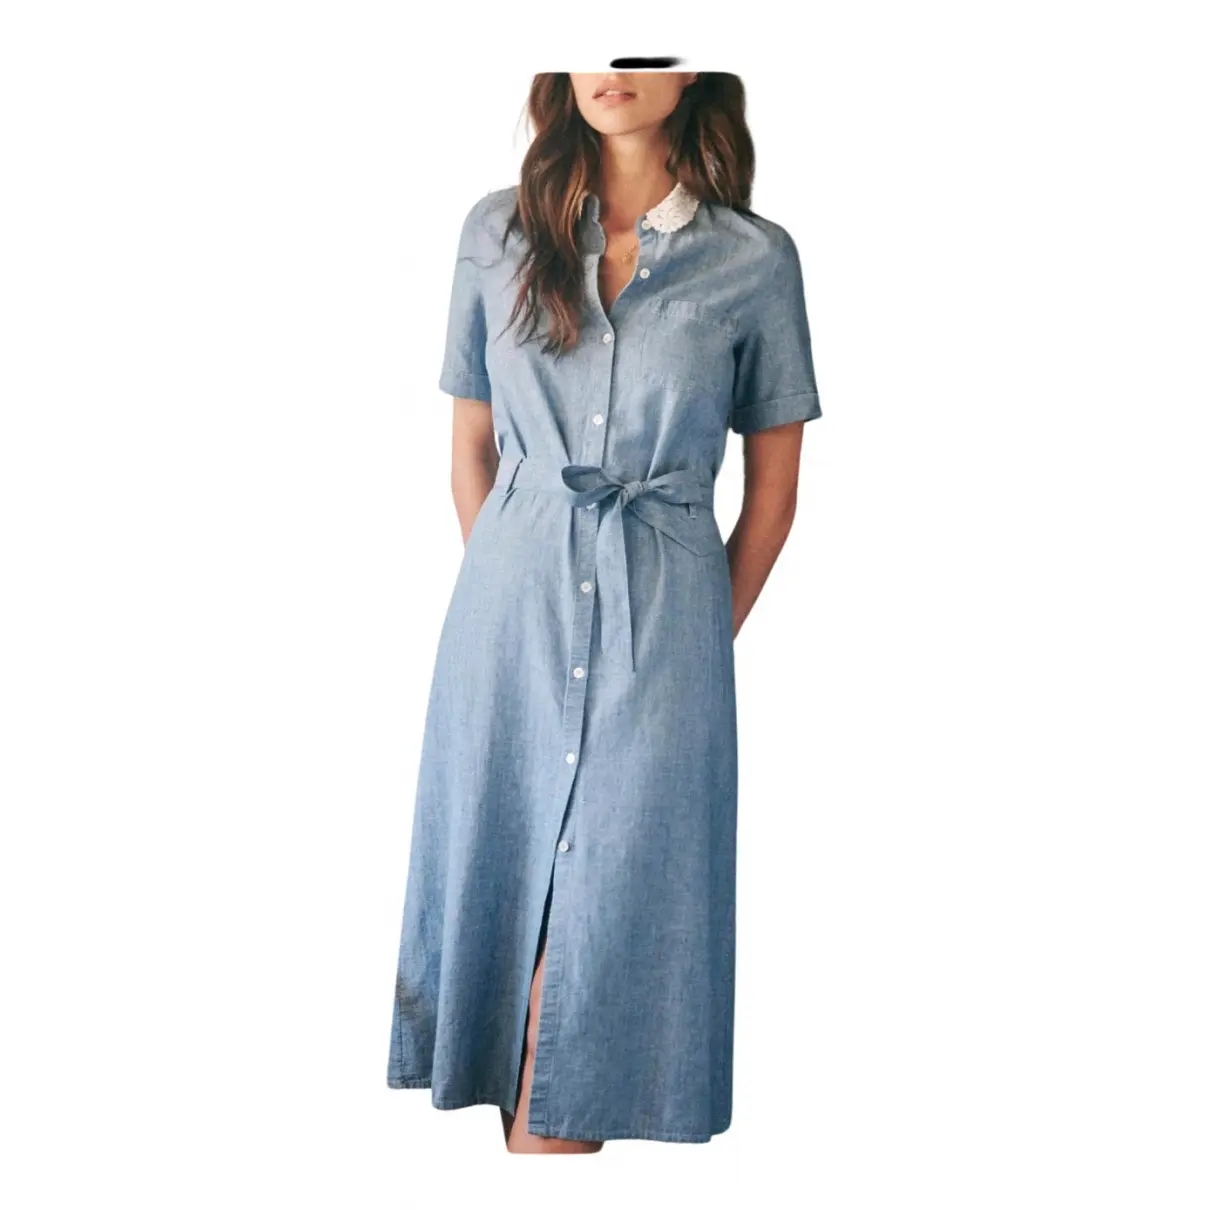 Buy Sézane Fall Winter 2019 mid-length dress online